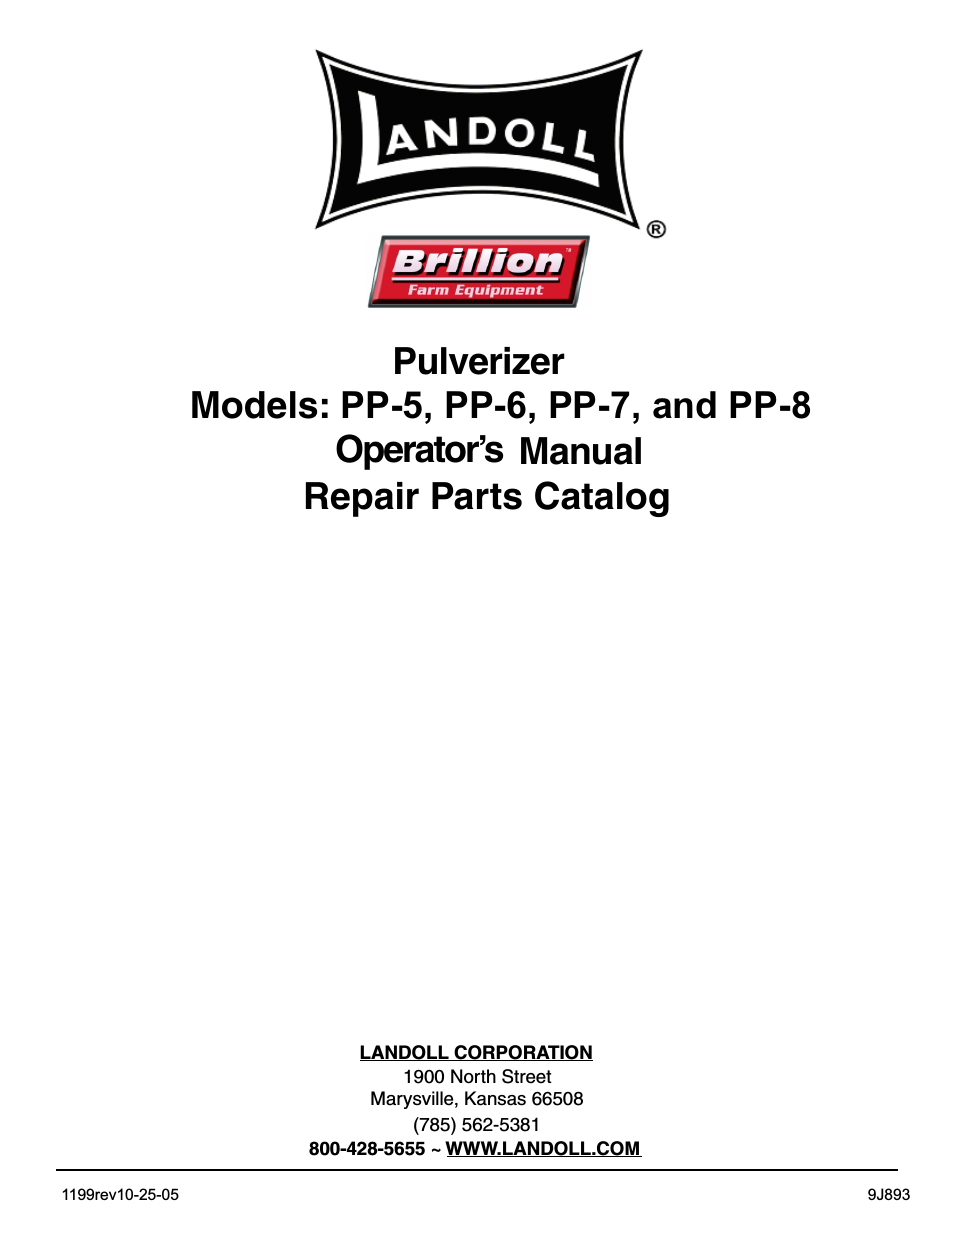 PP-5 Pulverizer